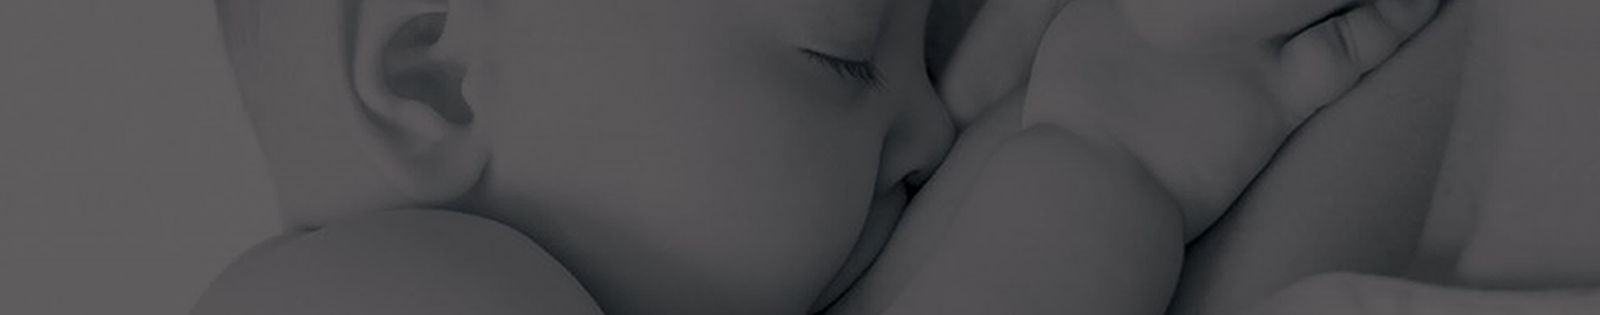 Breastfeeding baby black and white header